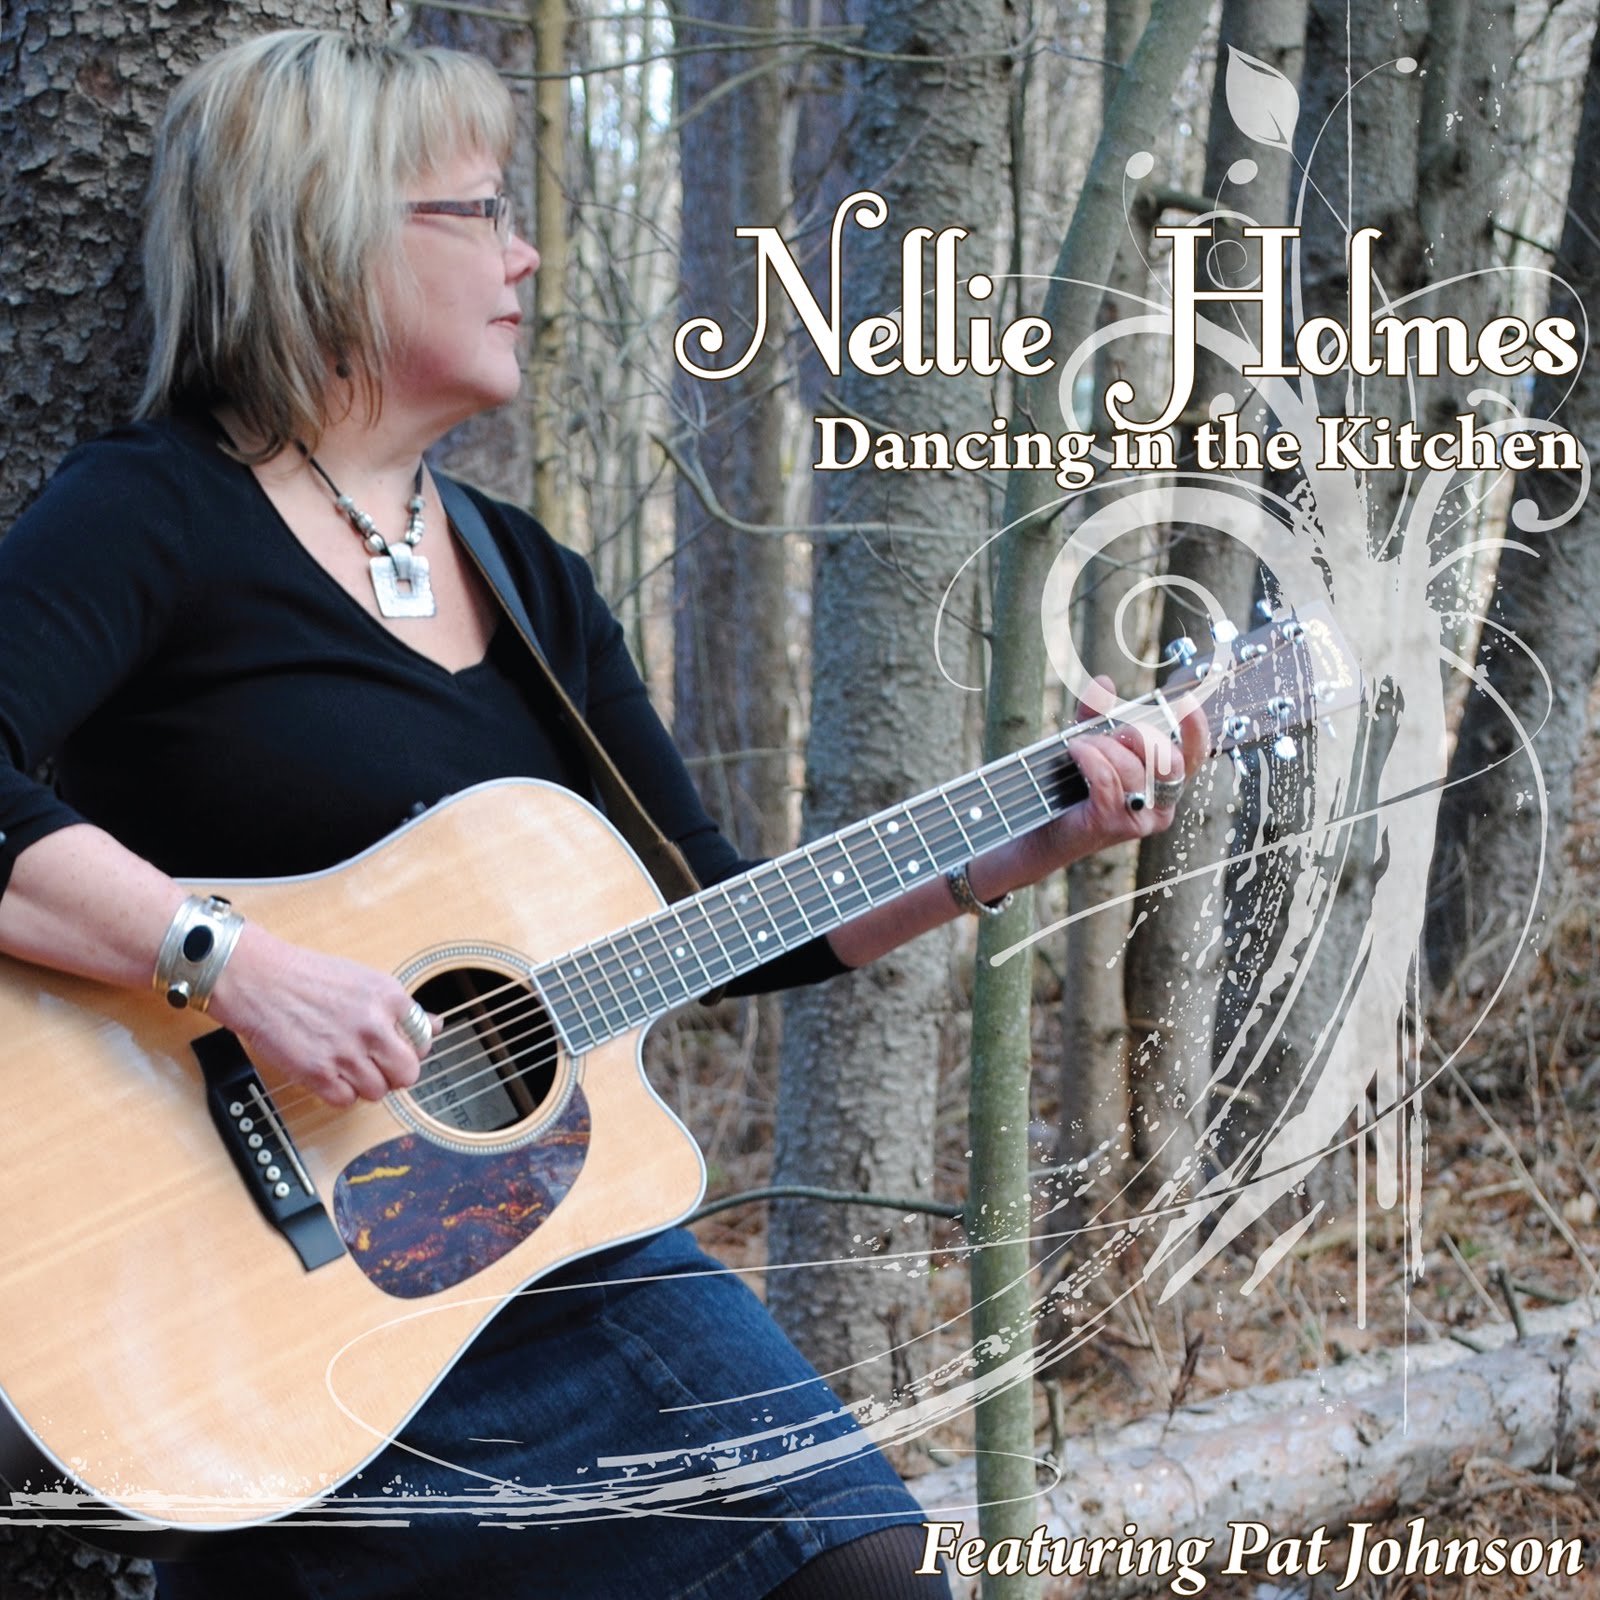 Nellie Holmes